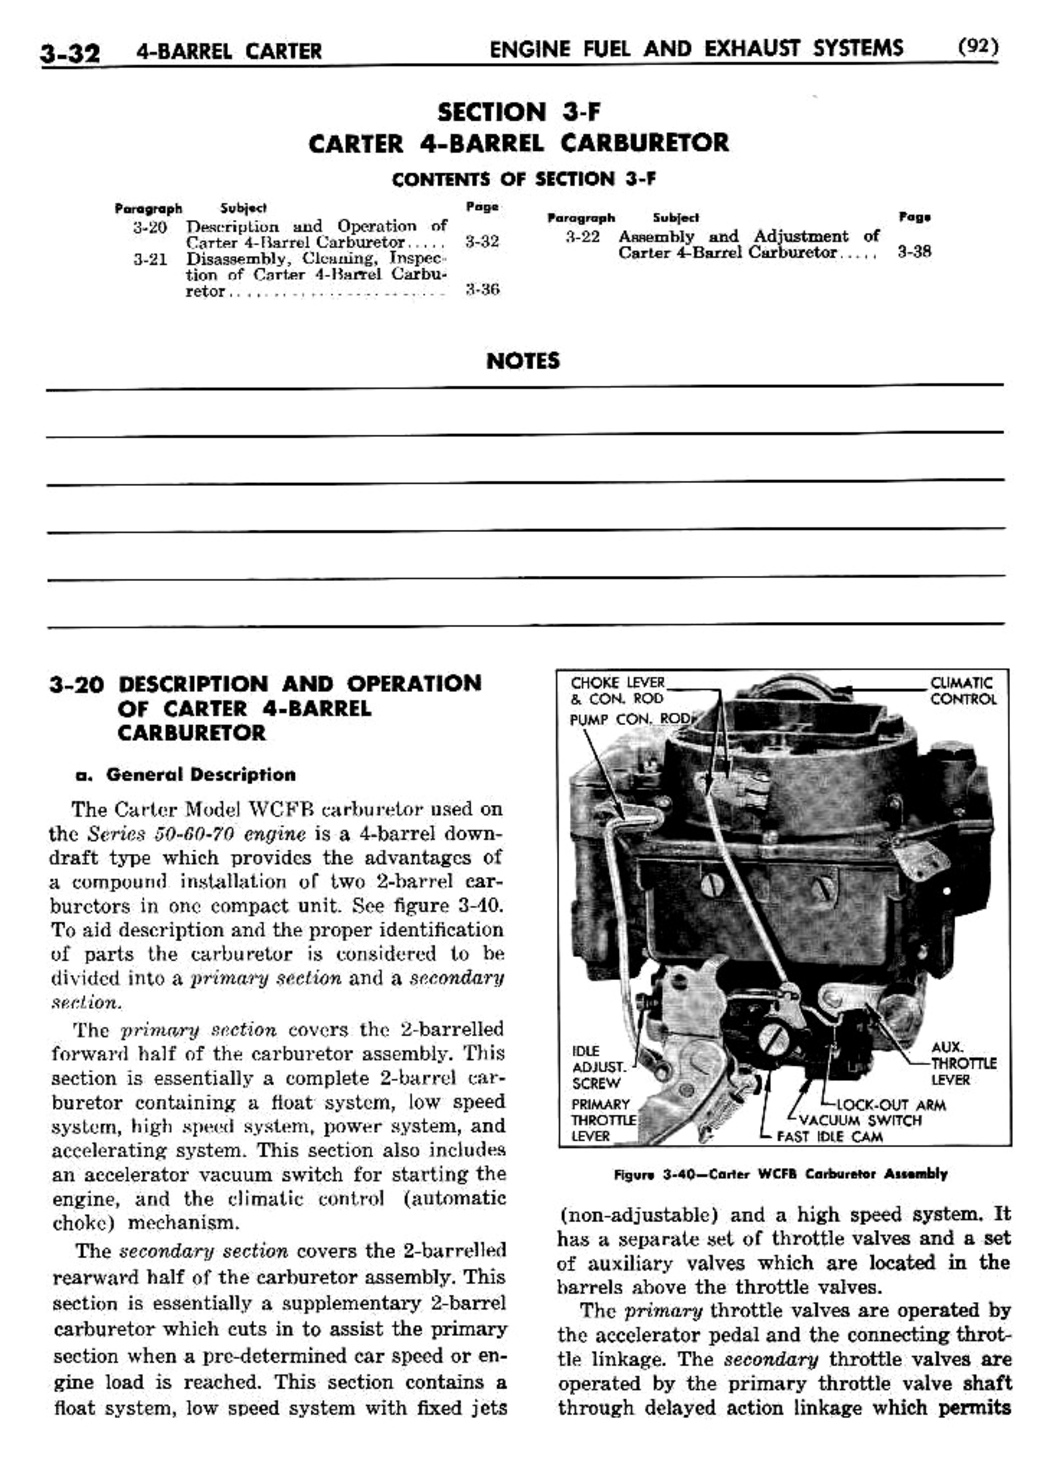 n_04 1956 Buick Shop Manual - Engine Fuel & Exhaust-032-032.jpg